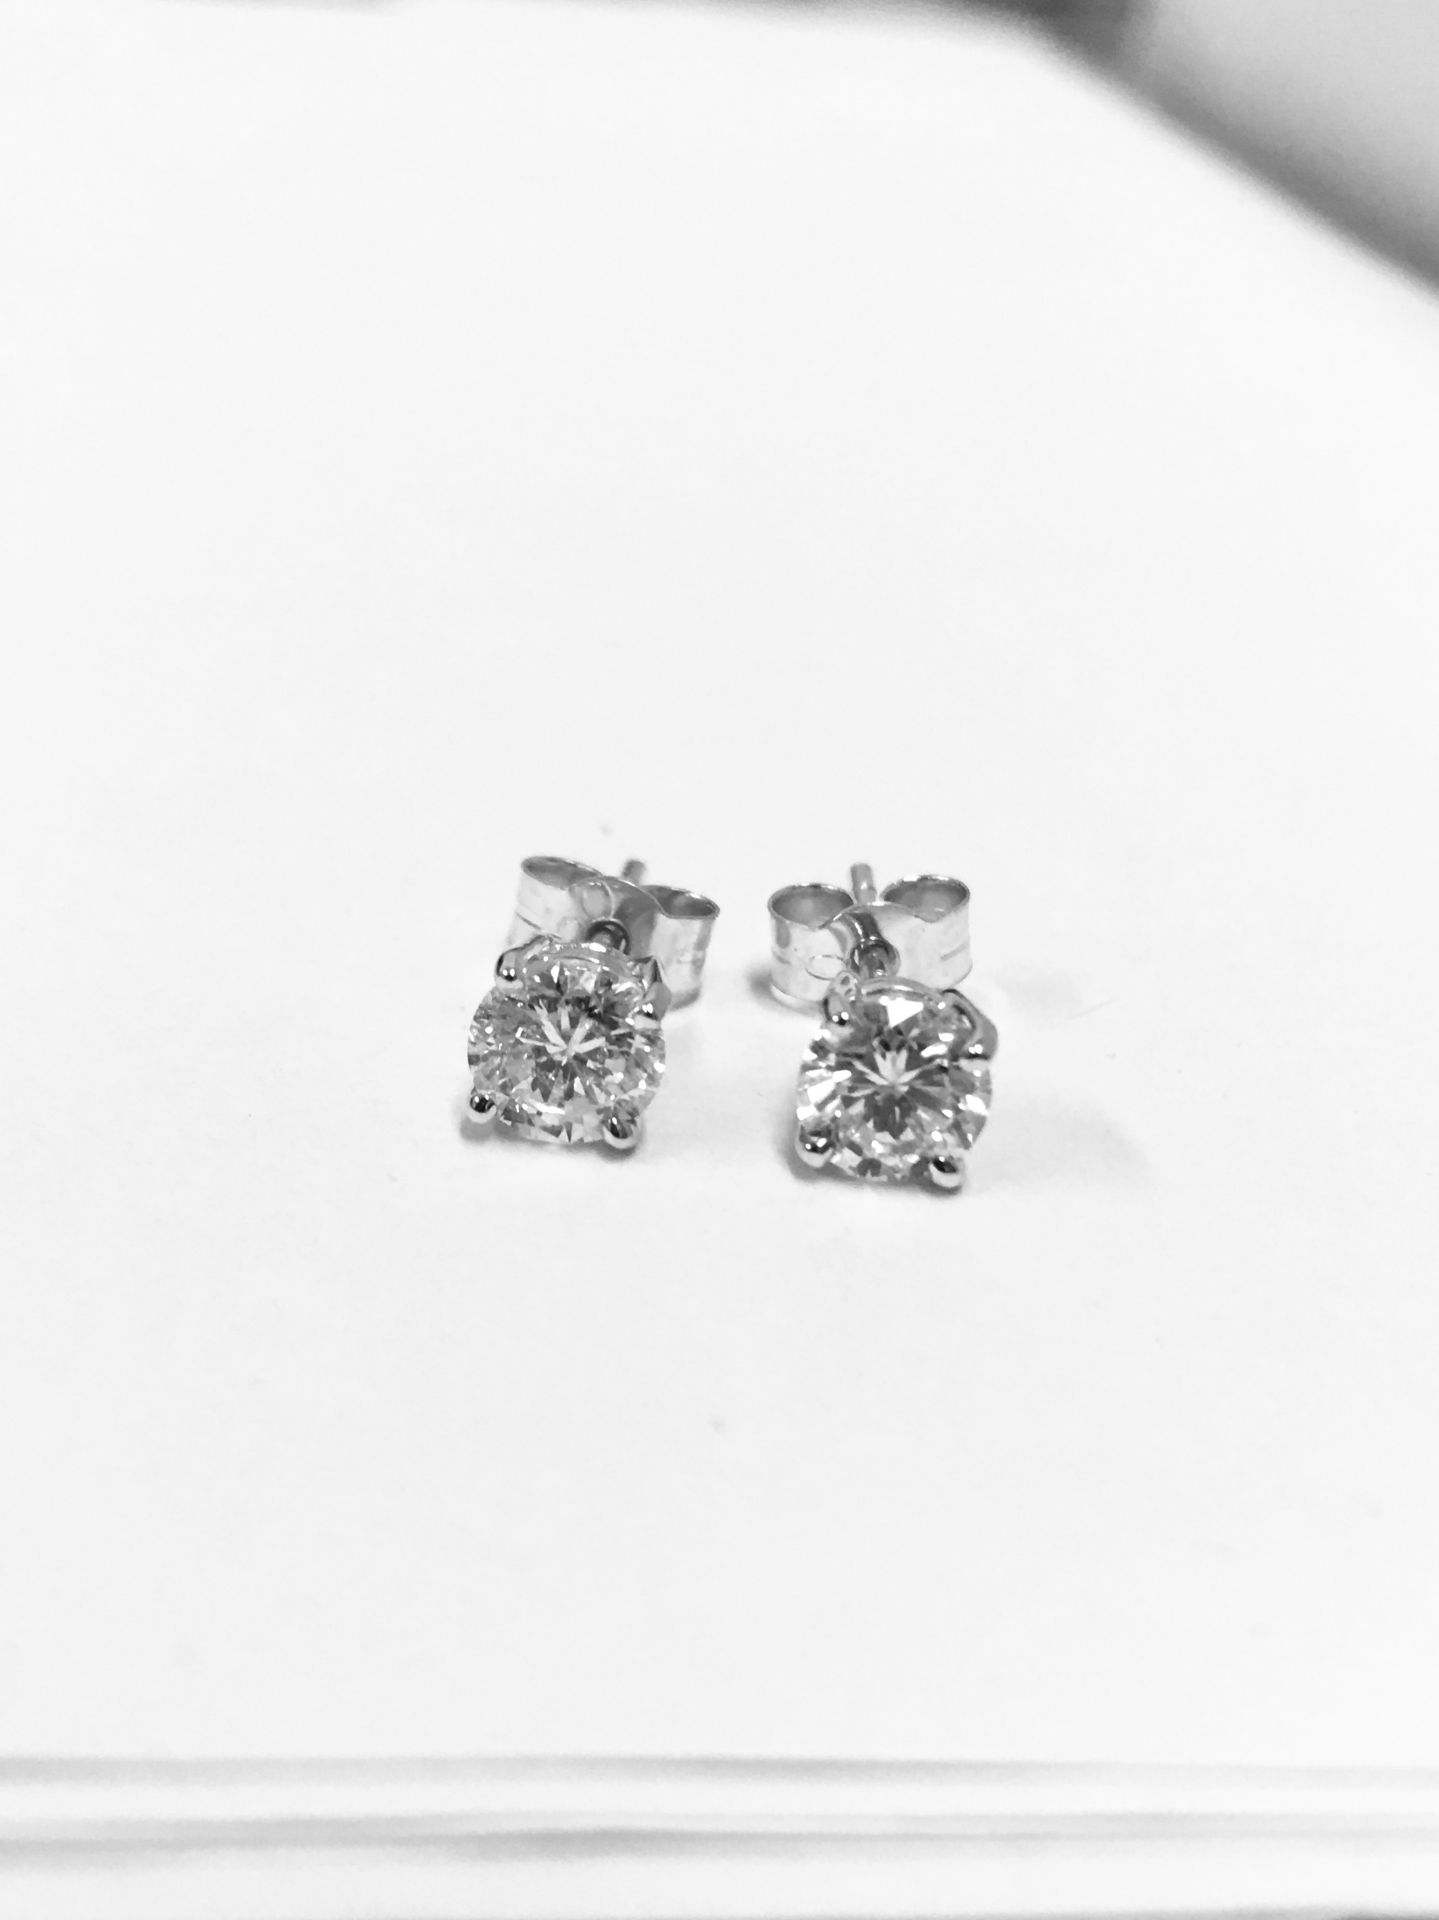 1ct diamond soliataire earrings2x0.50ct h colour vs grade diamonds ,18ct white gold 2gms uk made